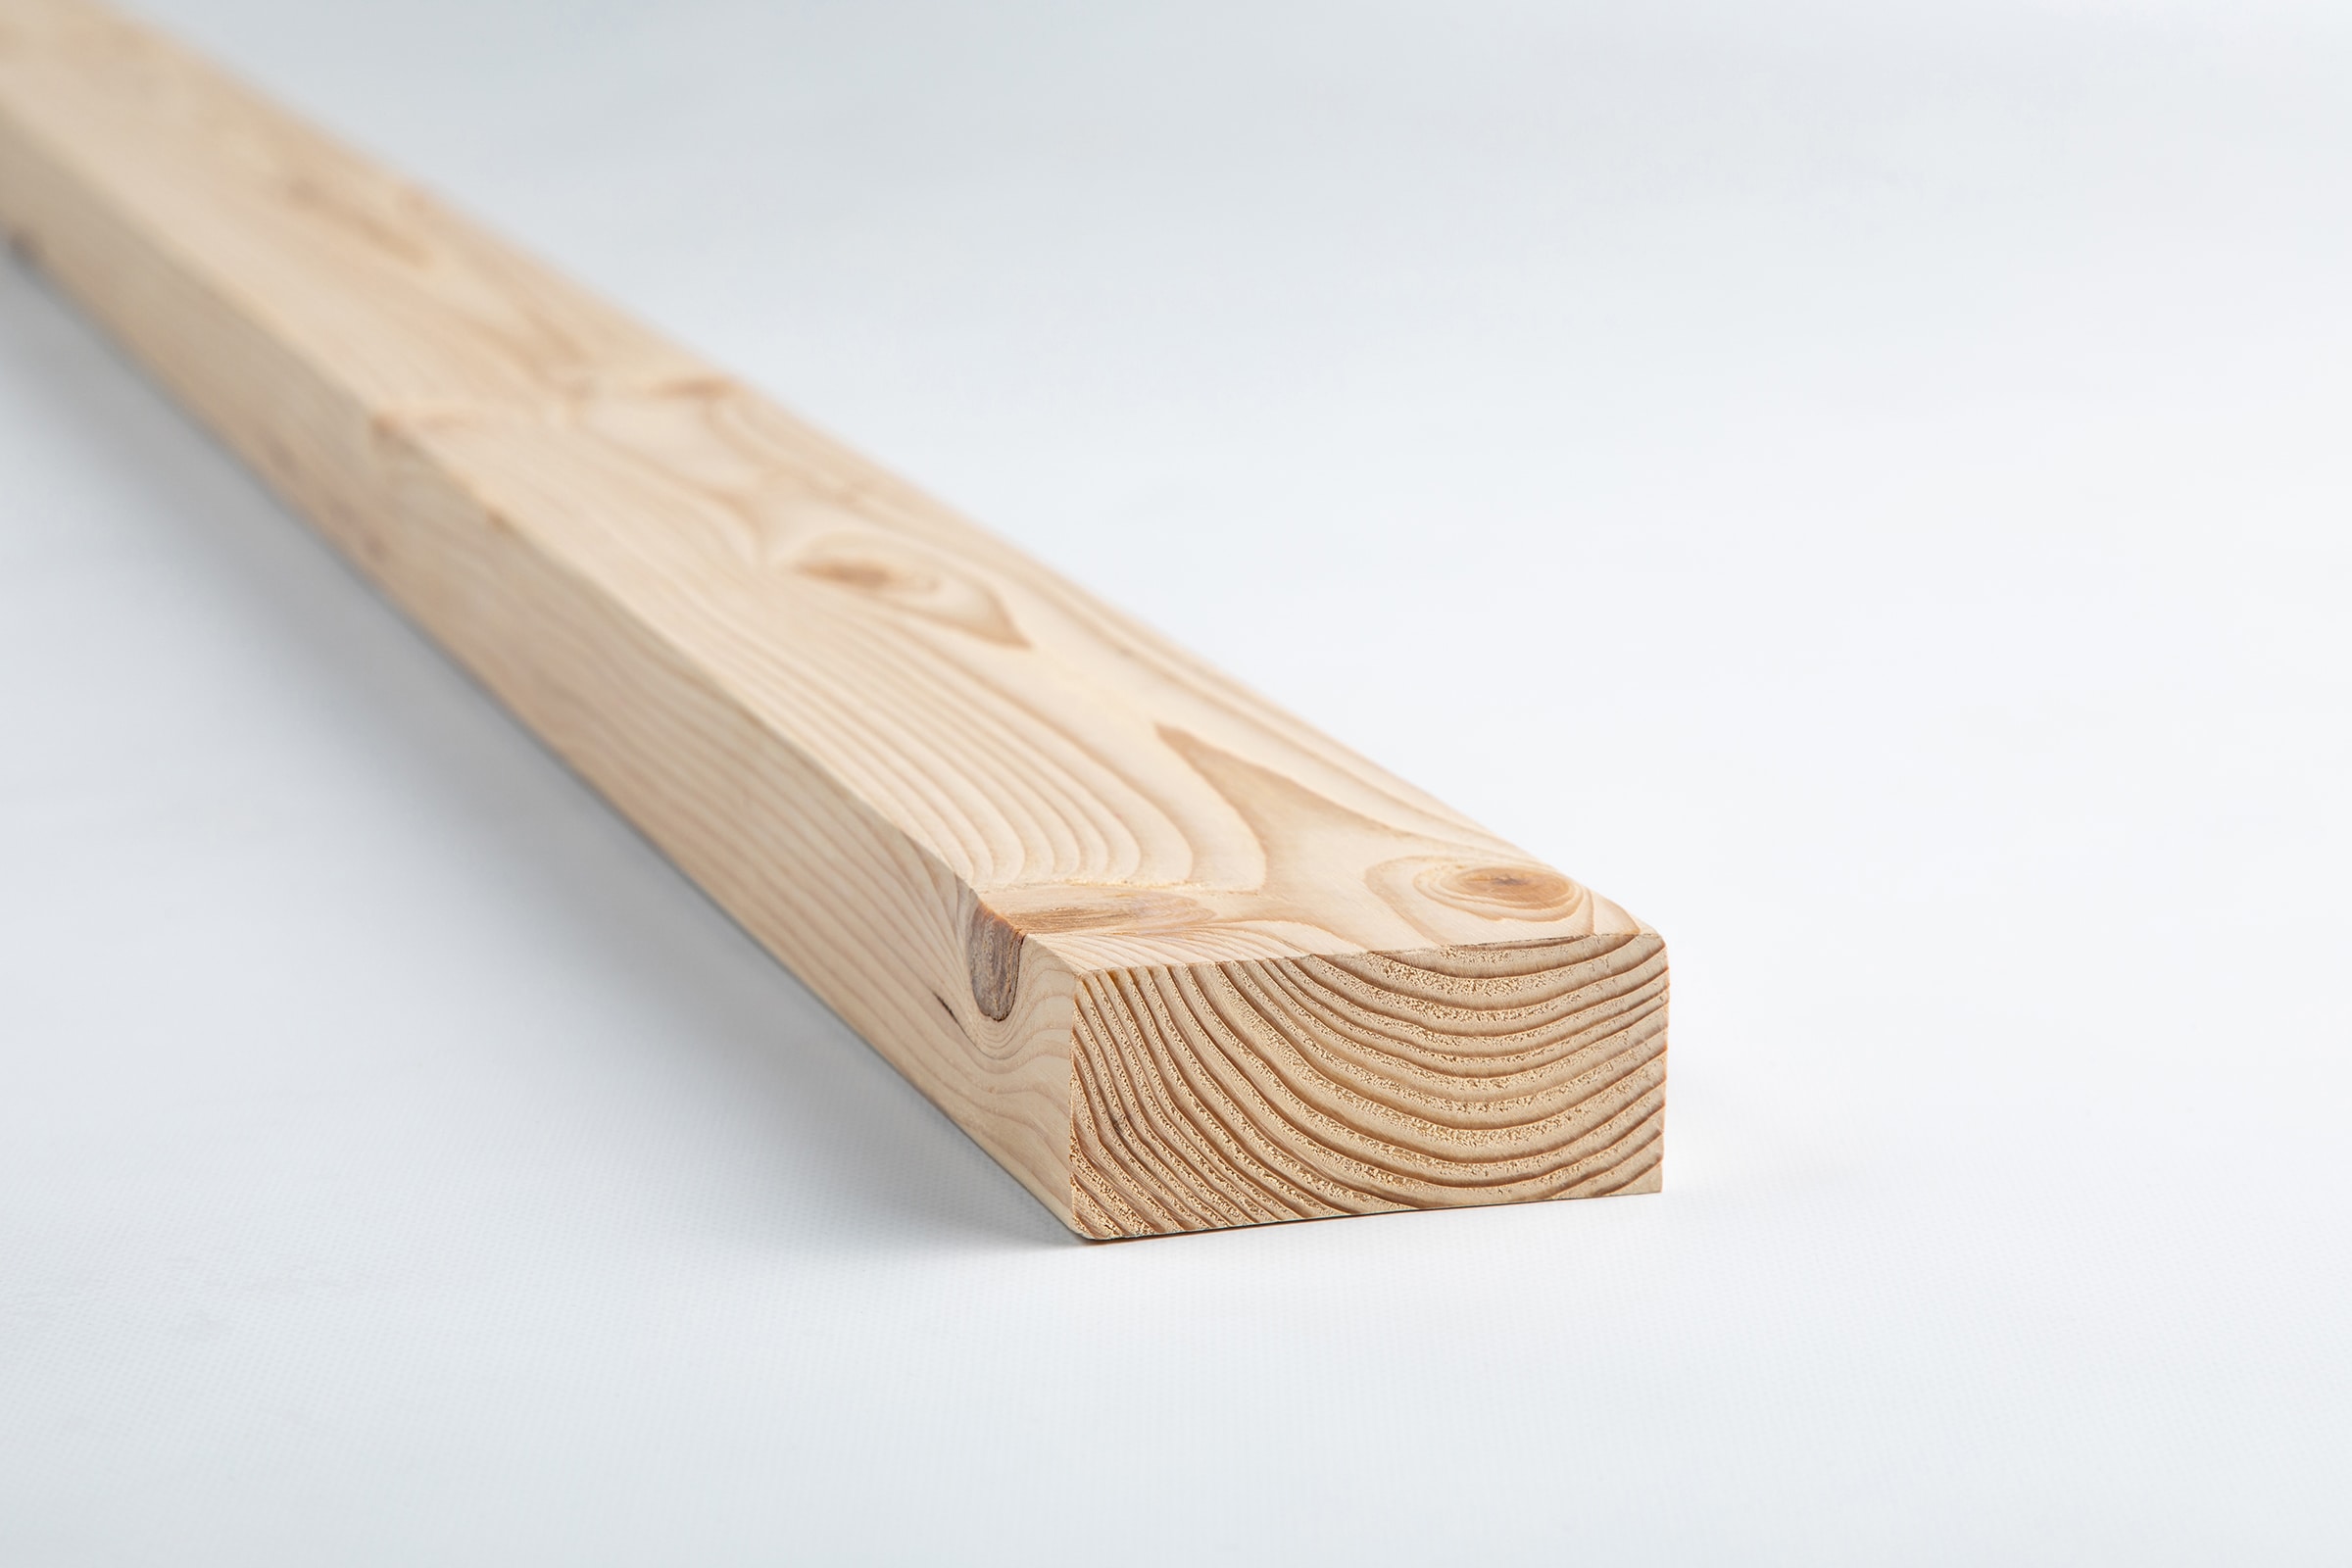 2-in x 4-in x 12-ft Fir Kiln-dried Lumber in the Dimensional